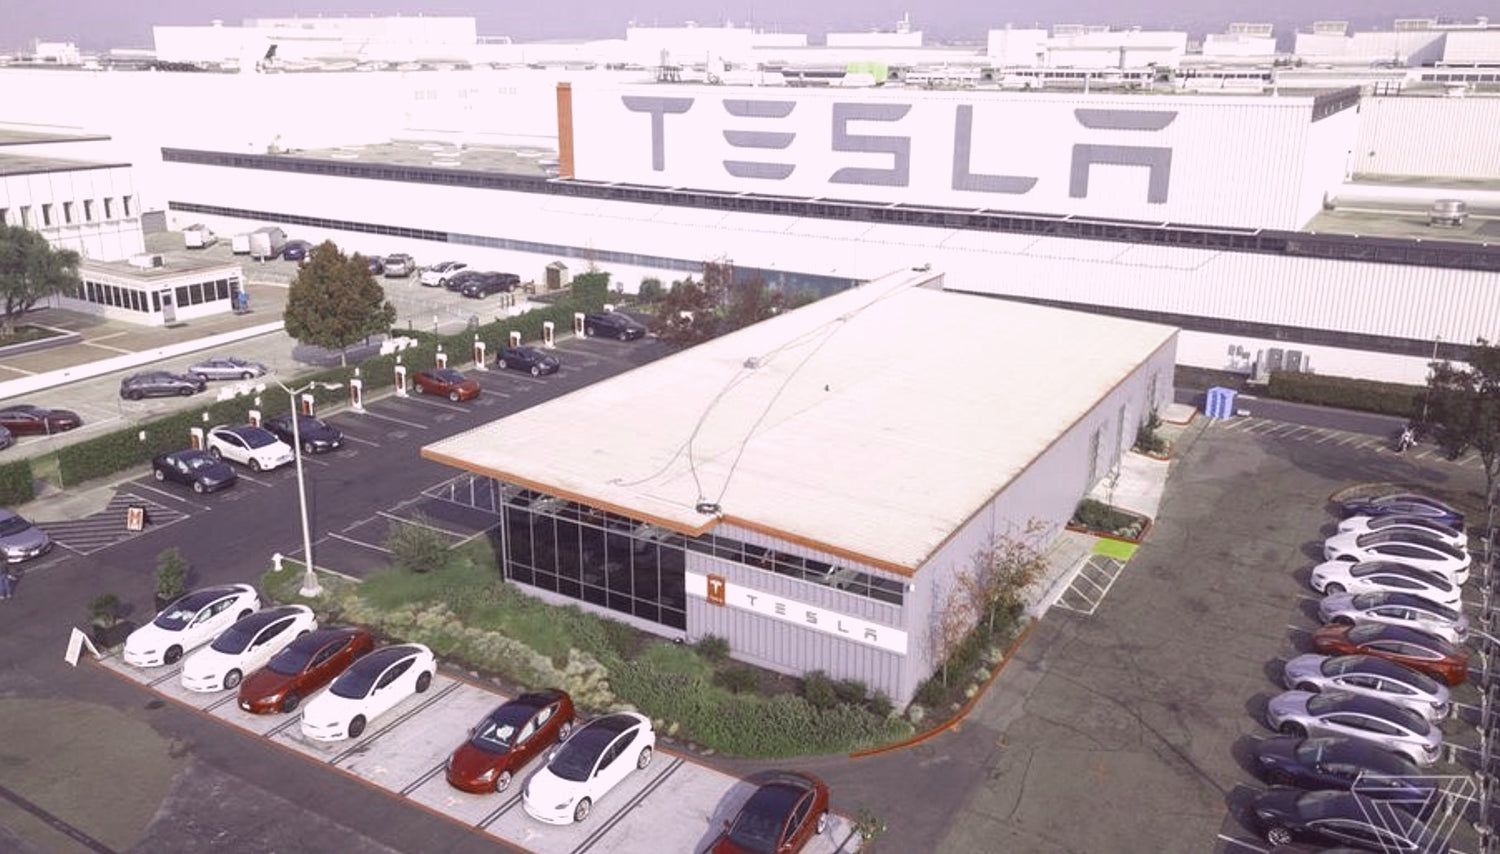 Tesla Fremont Factory's Roadrunner Project Indicates It Has Solved The Battery Bottleneck Issue